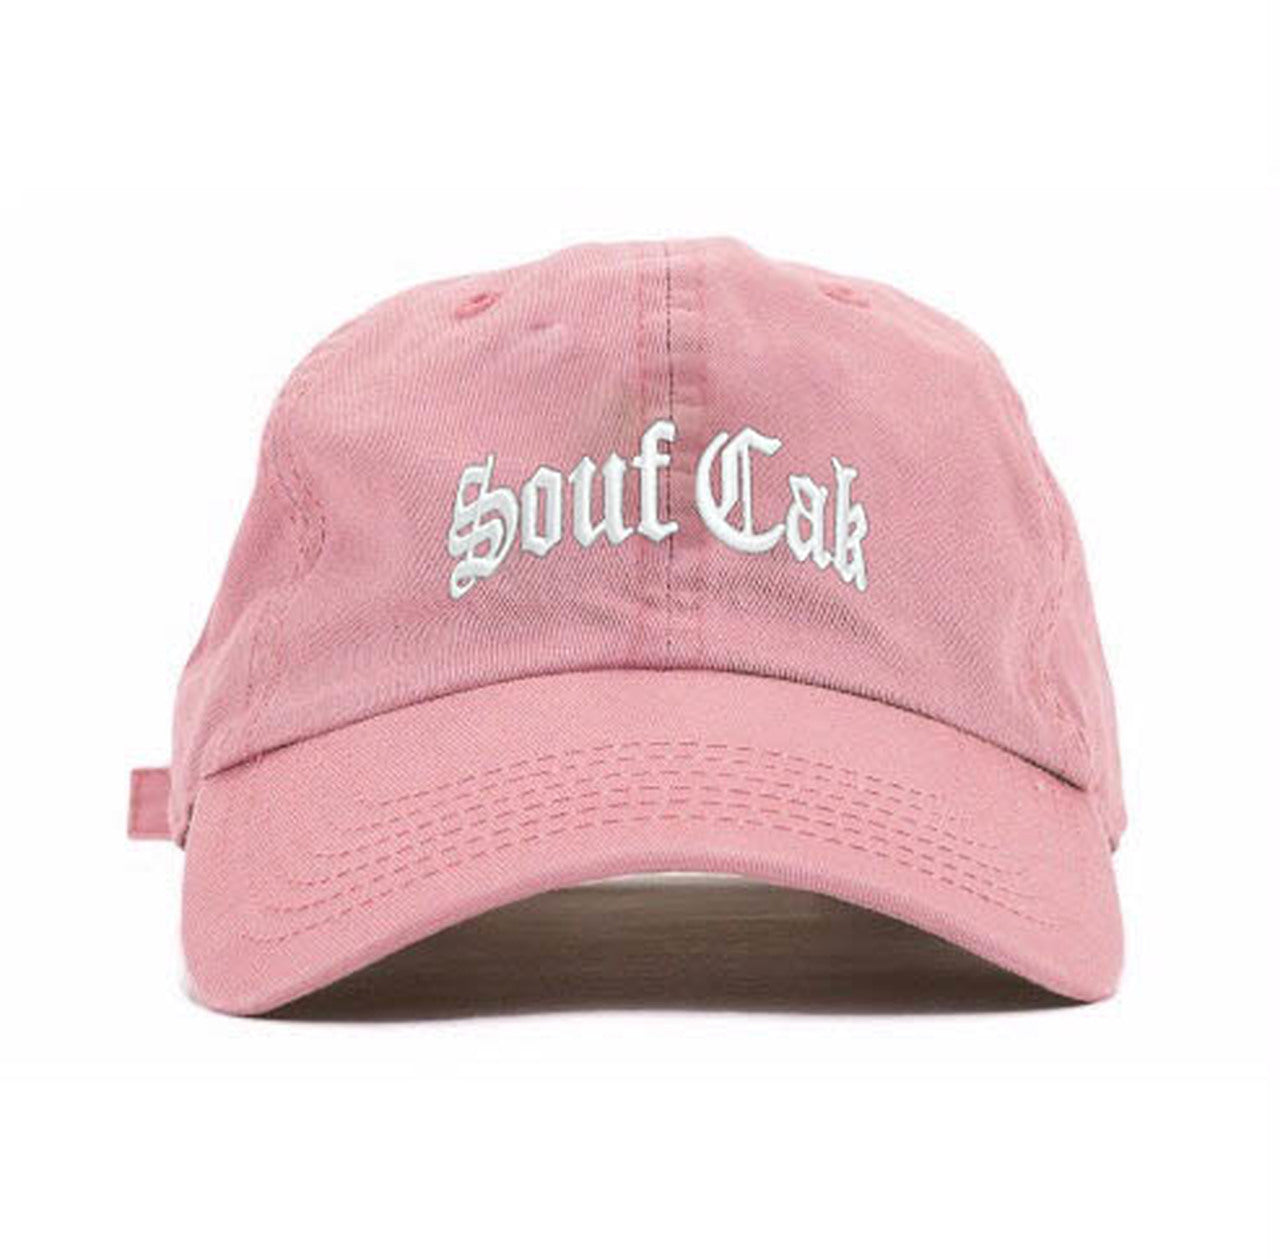 Souf Cak Dad Hat- Pink(White)